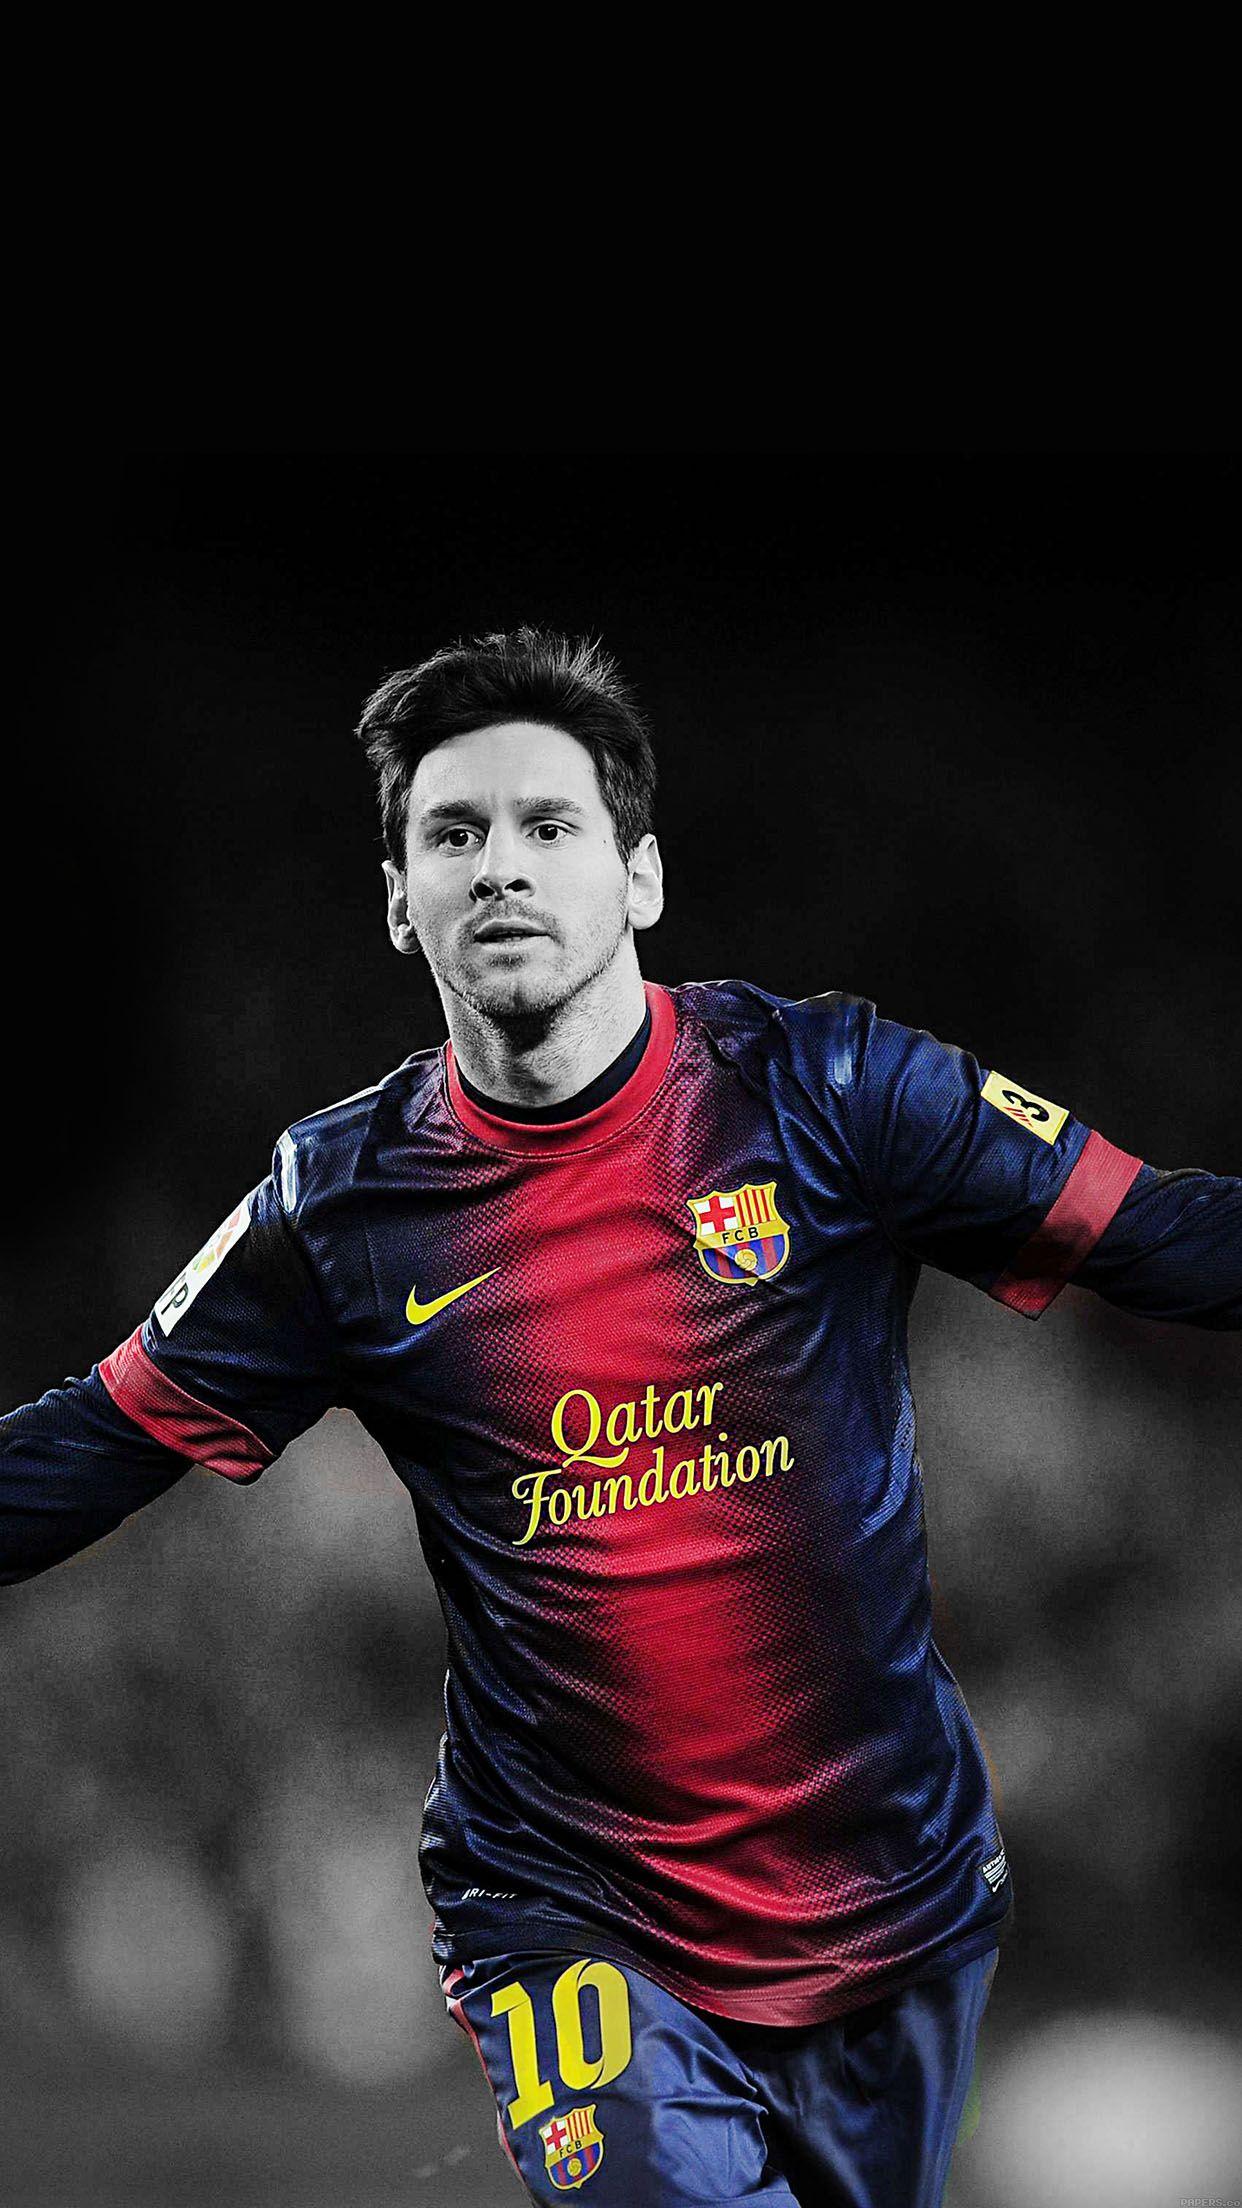 Wallpaper Messi Soccer Barcelona Sports Android wallpaper